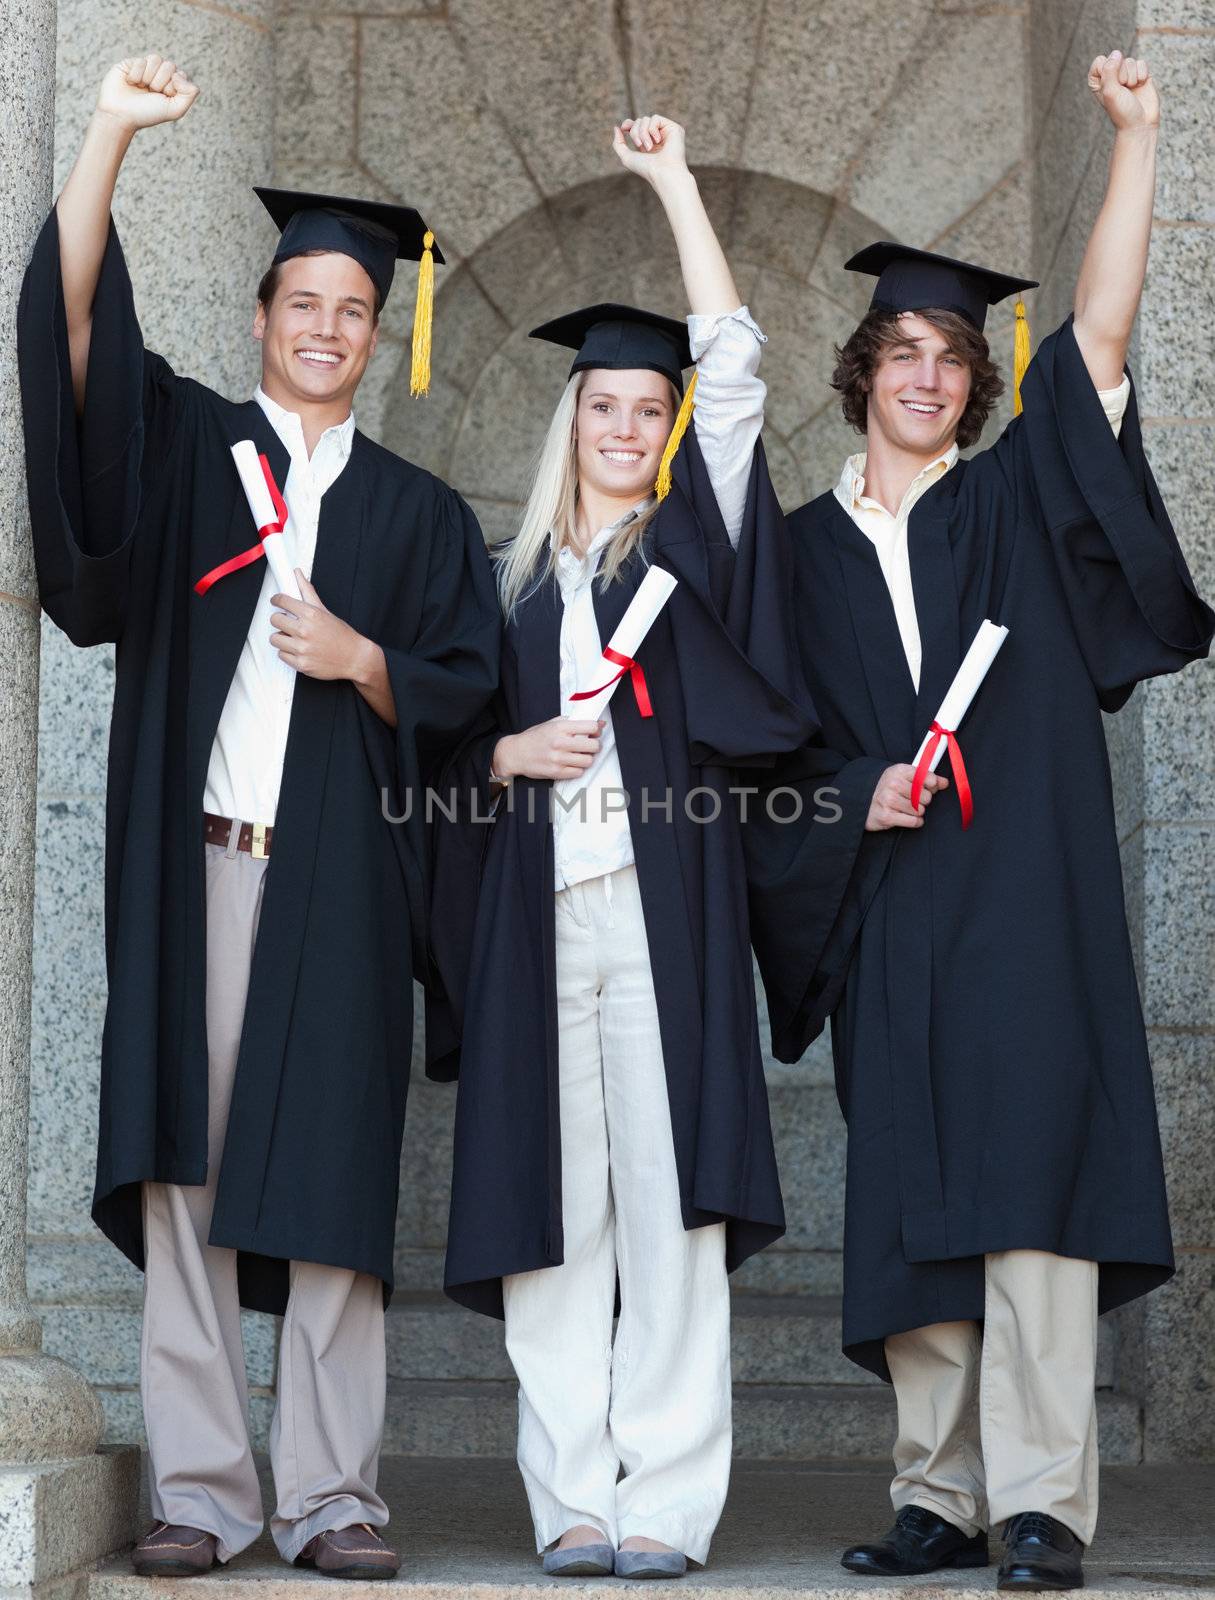 Smiling graduates raising arm by Wavebreakmedia